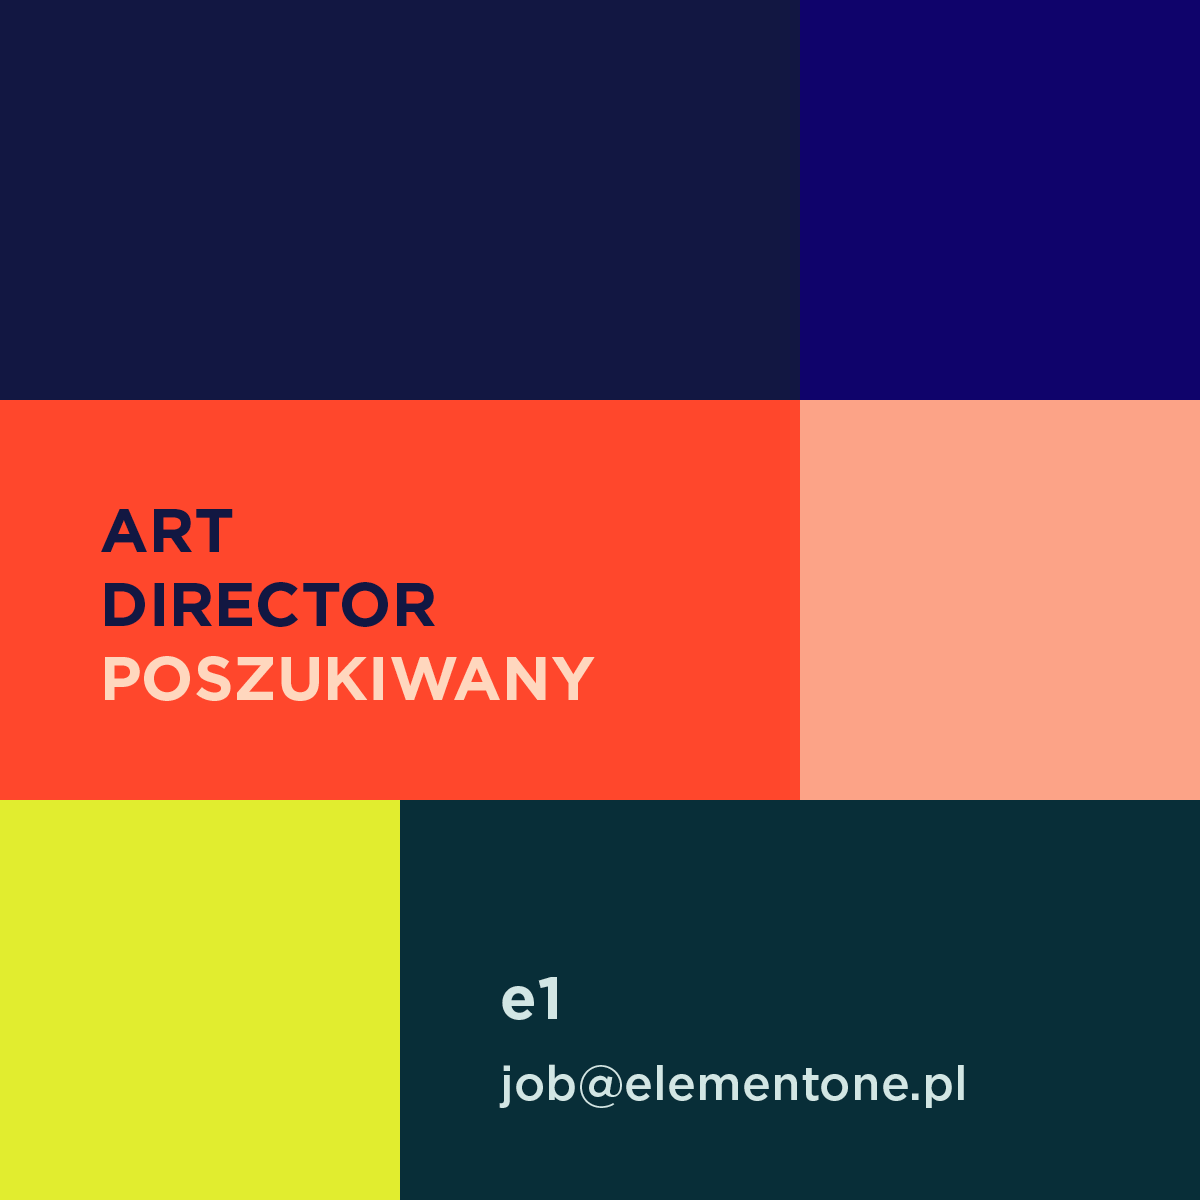 Art Director w e1